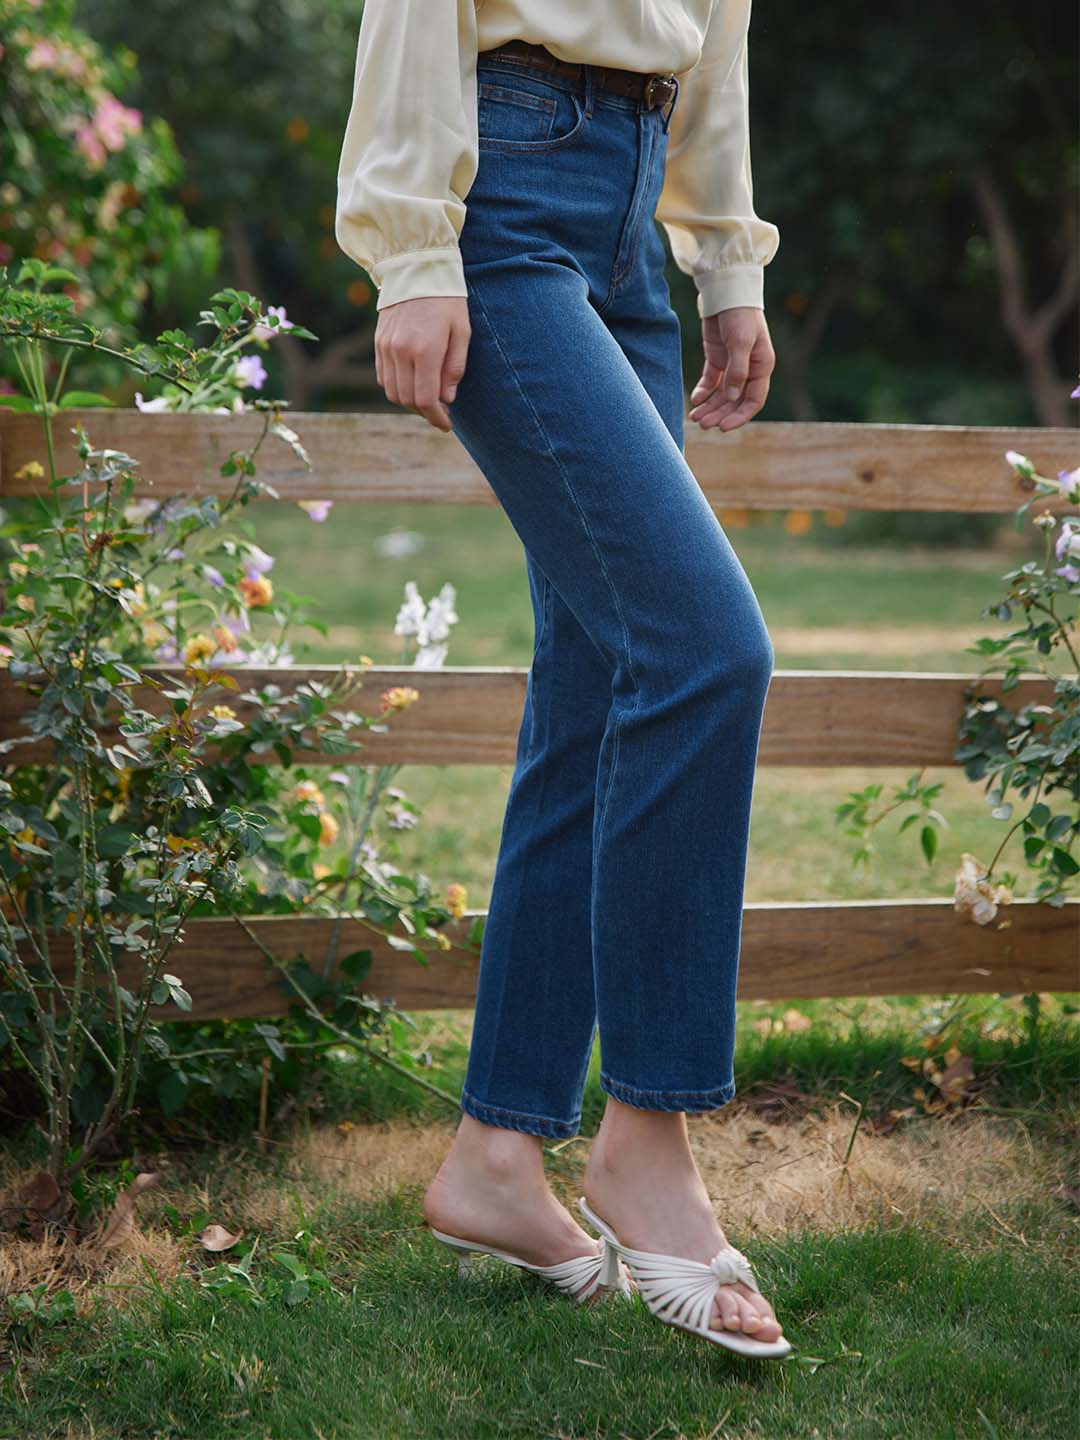 Simple Retro- Gemma 深藍色高腰修身顯瘦牛仔褲